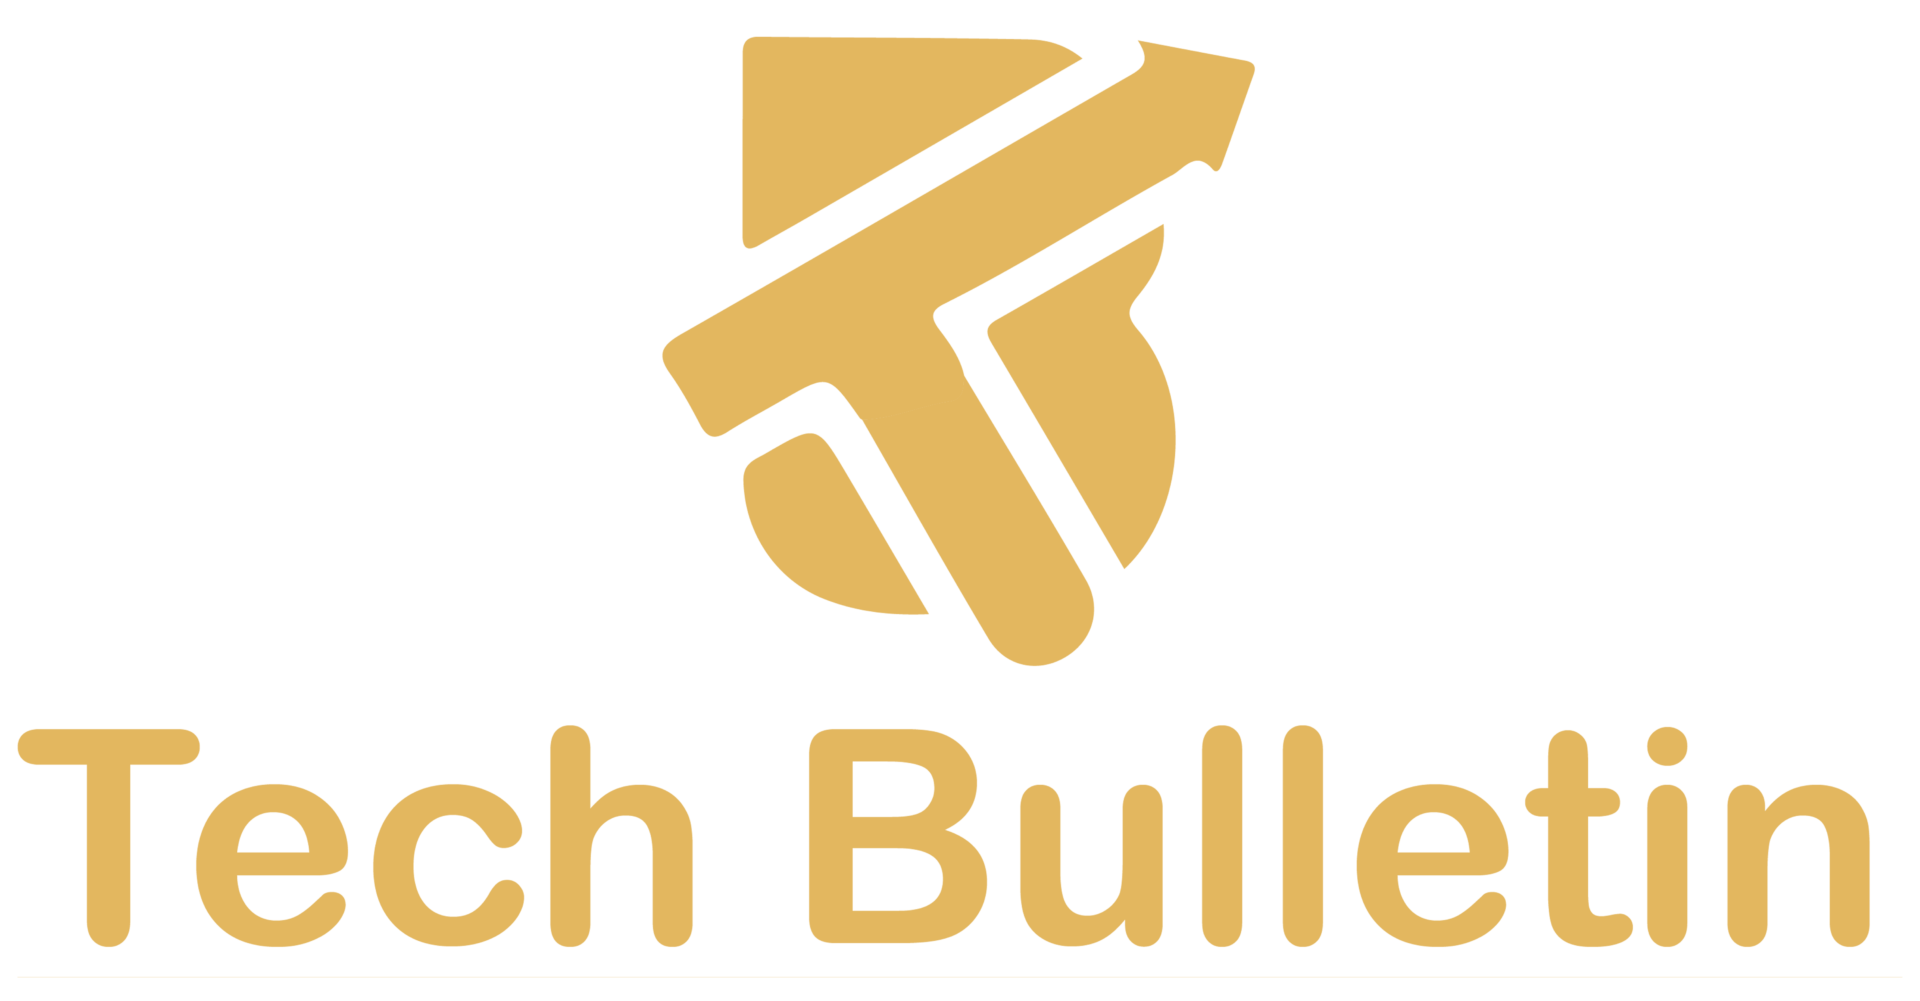 Tech Bulletin